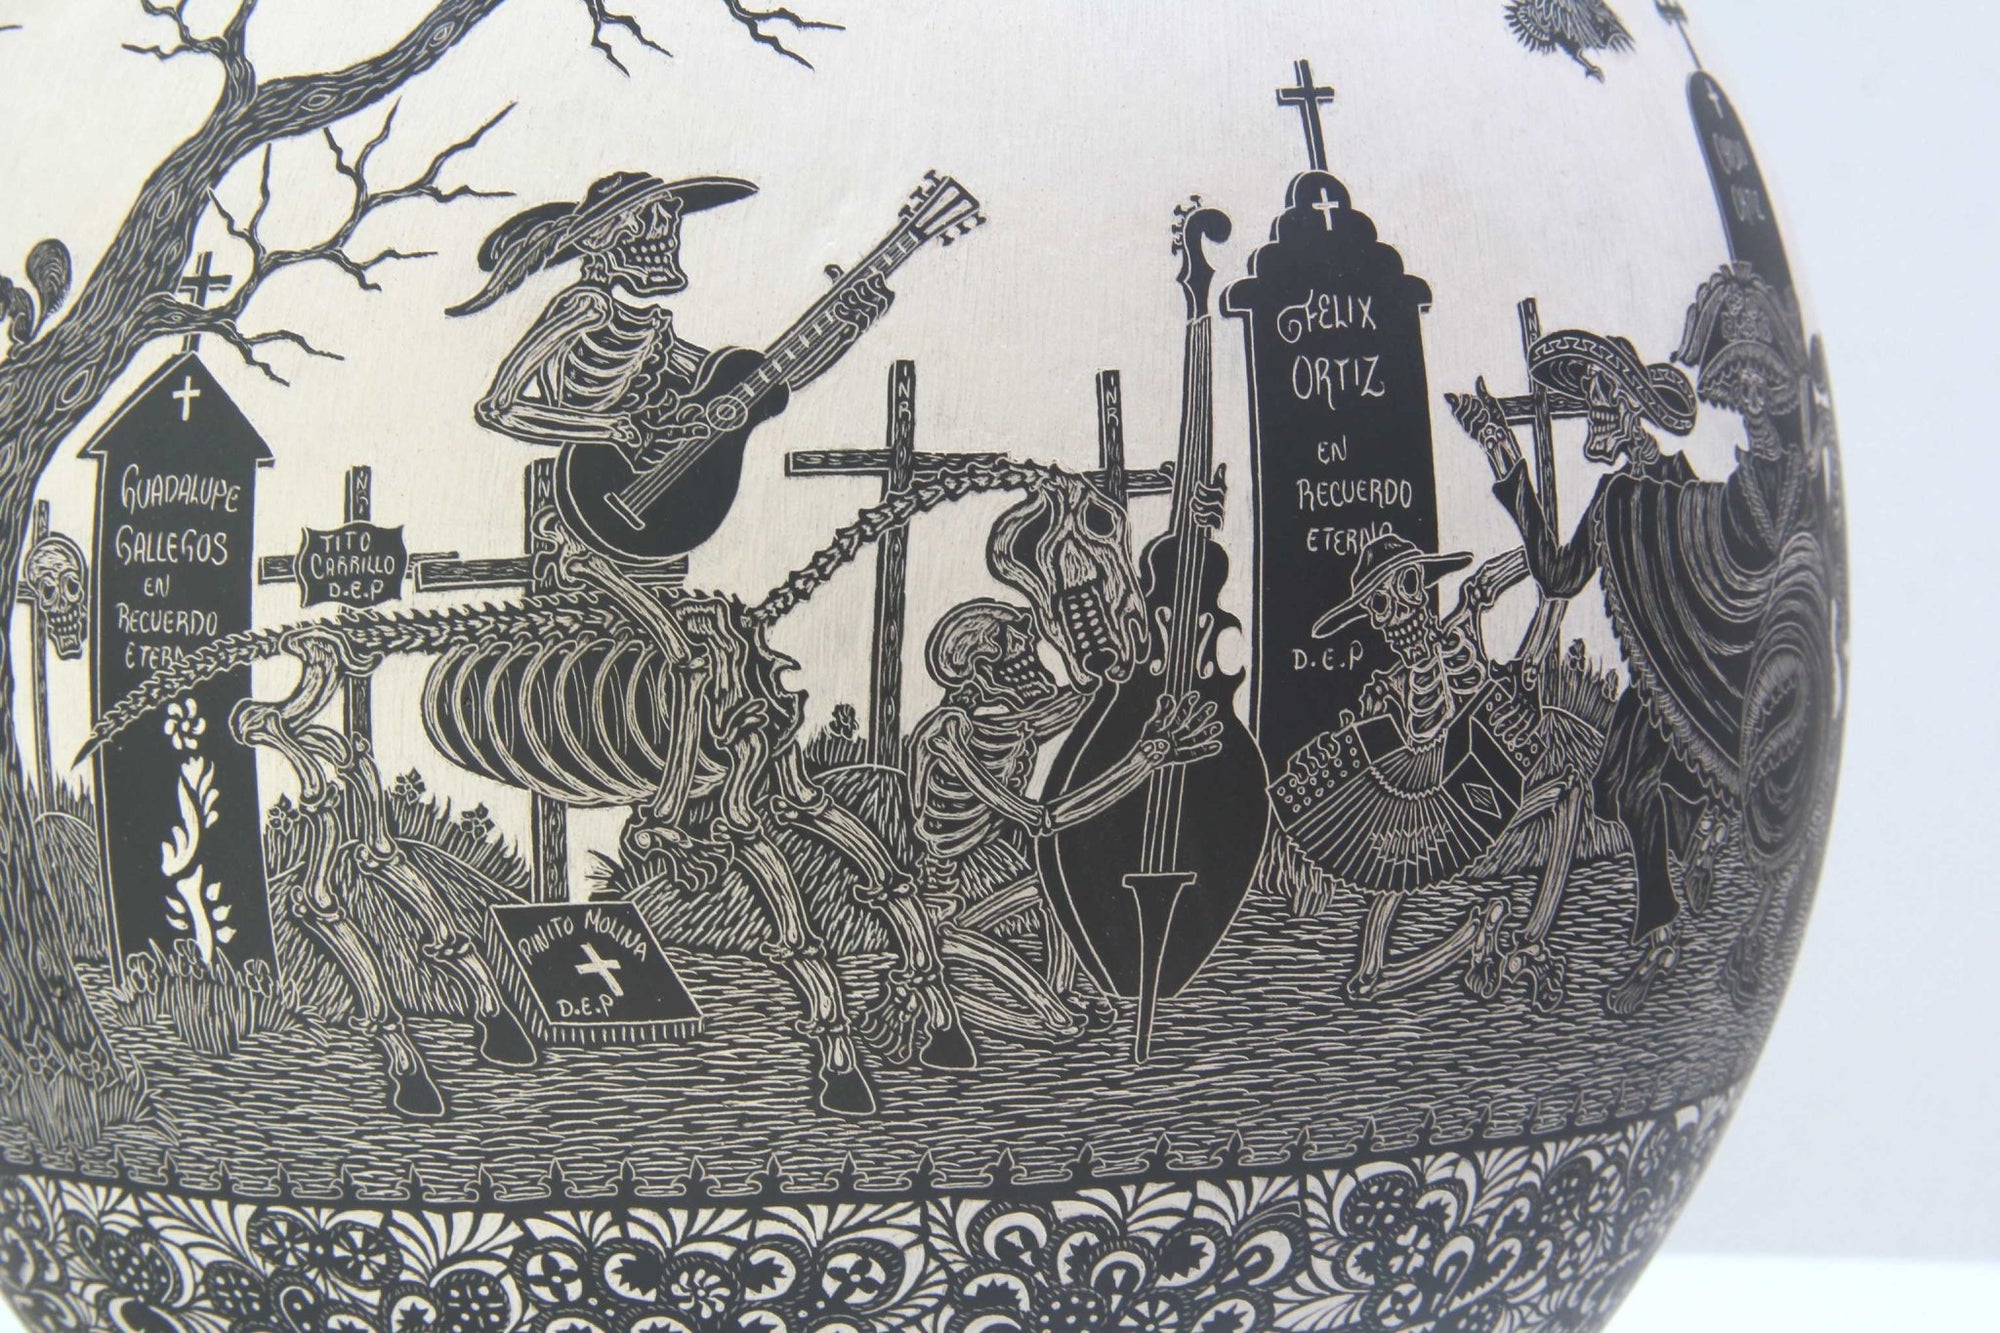 Mata Ortiz Ceramic - Day of the Dead, the Rhythm of the Rebels- Masterpiece - Huichol Art - Marakame